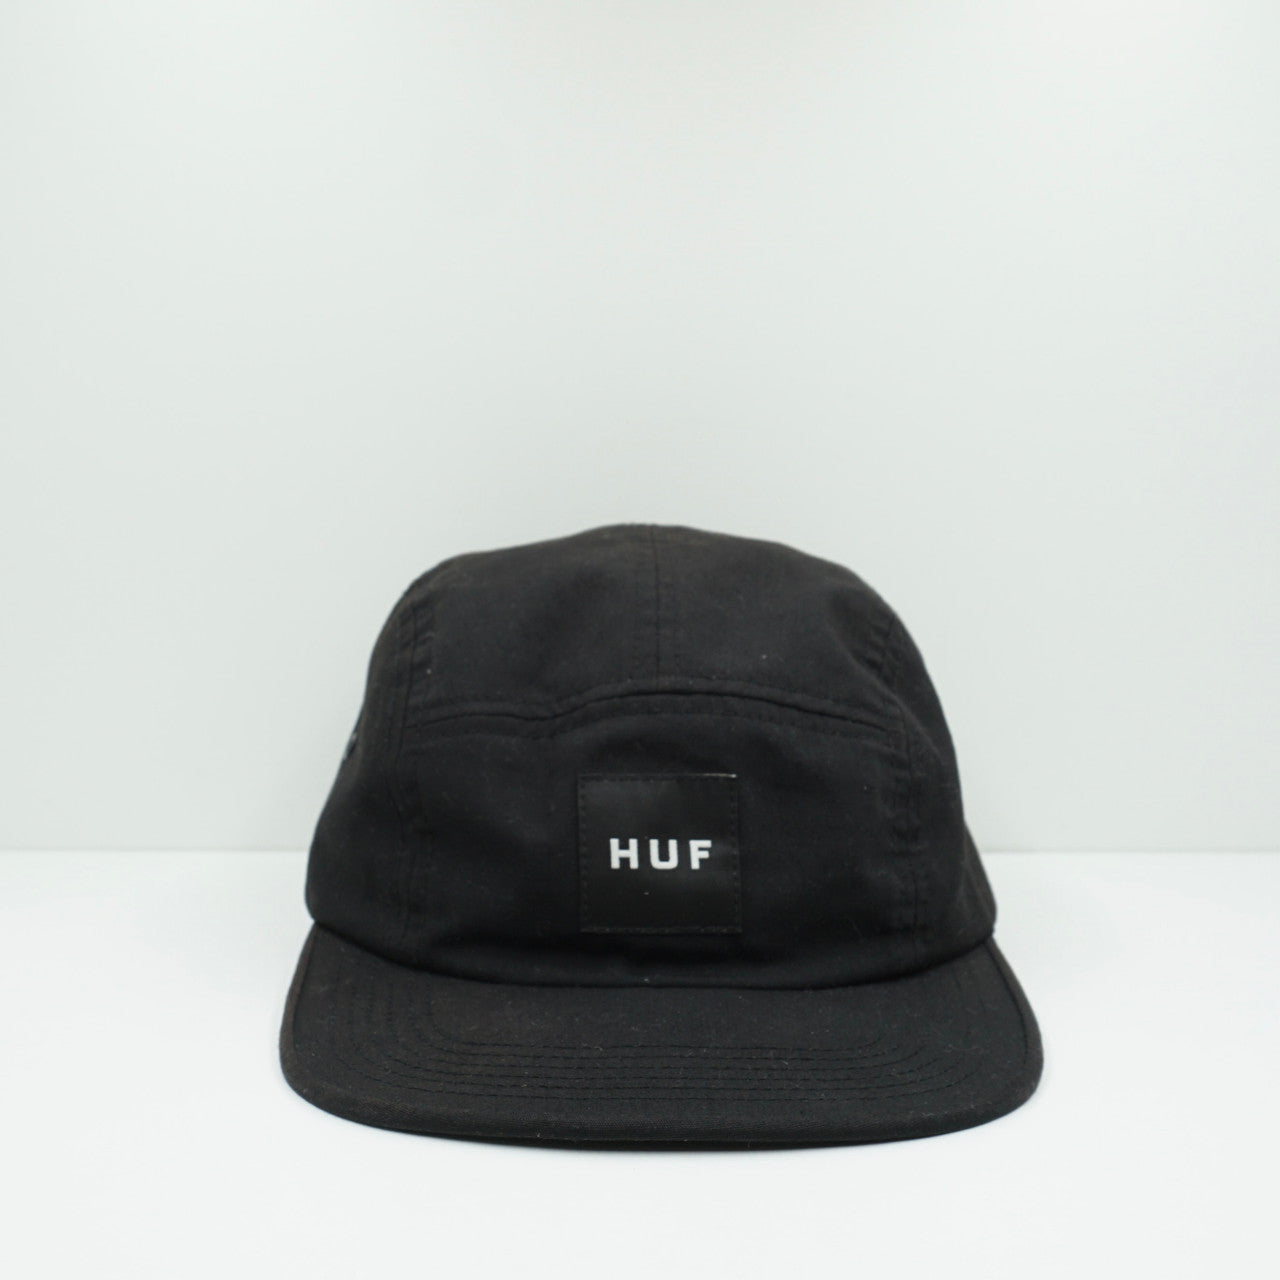 Huf 5 Panel Adjustable Black Cap